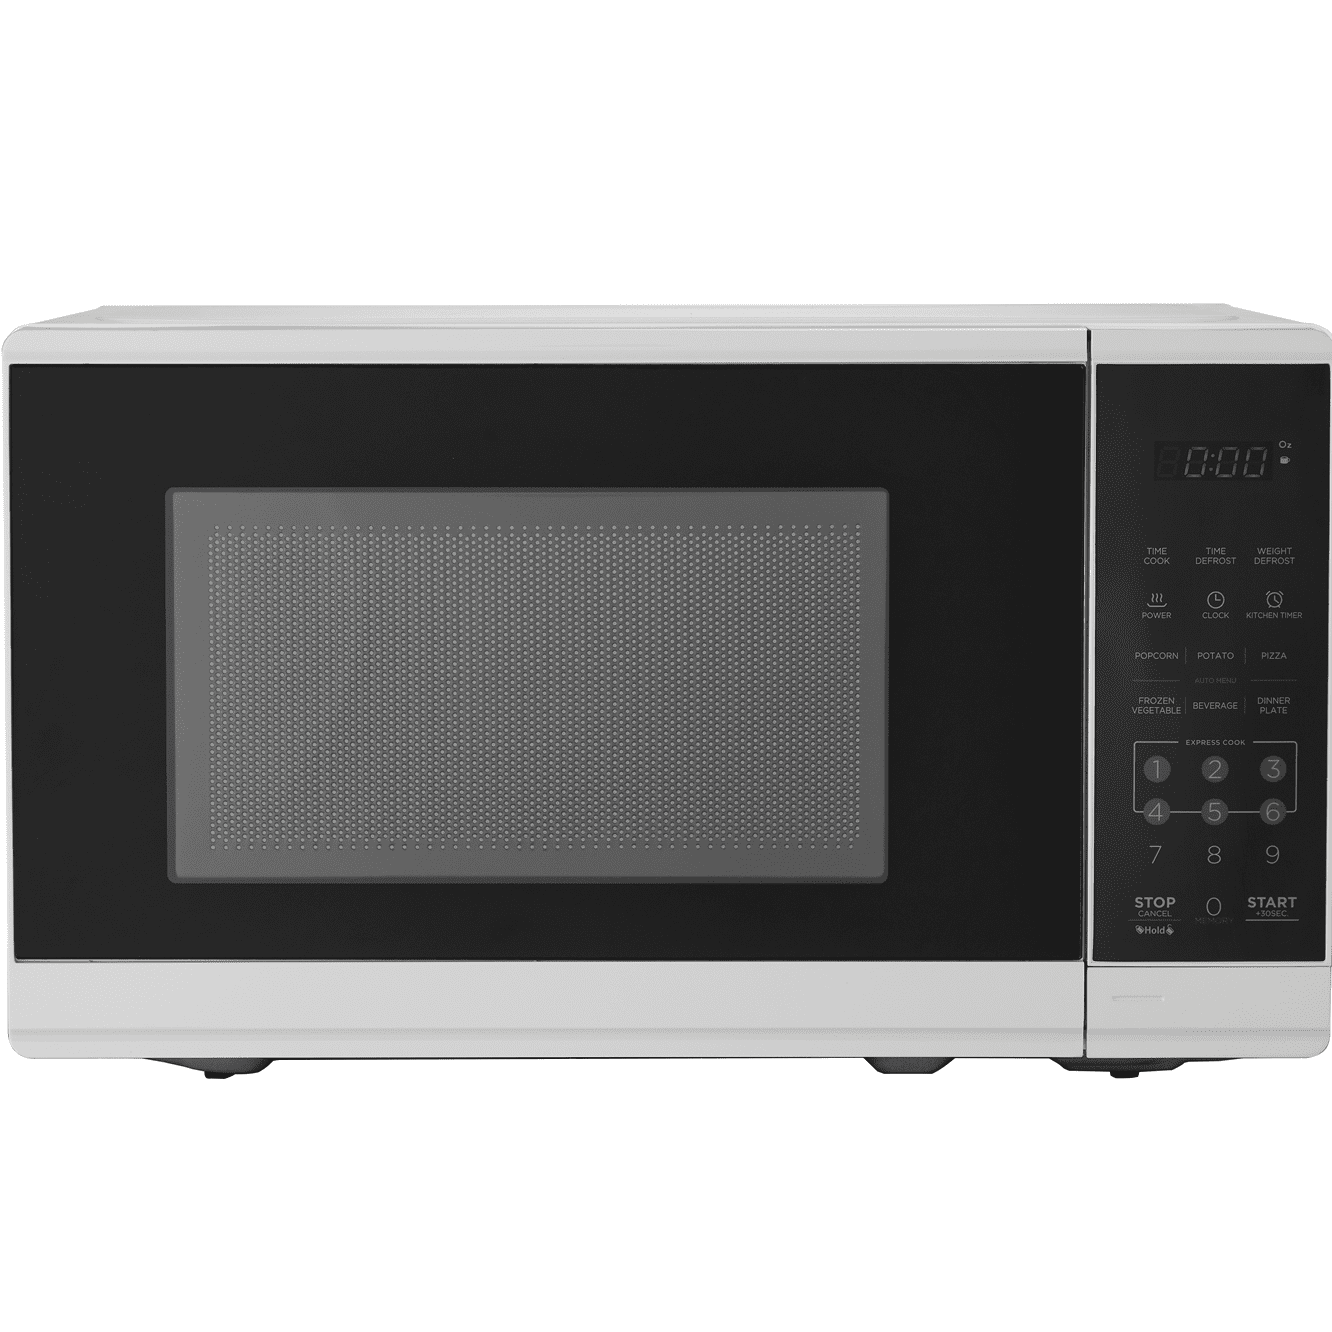 Sunbeam 0.7 CuFt 700 Watt Microwave Oven SGDJ701, White - Walmart